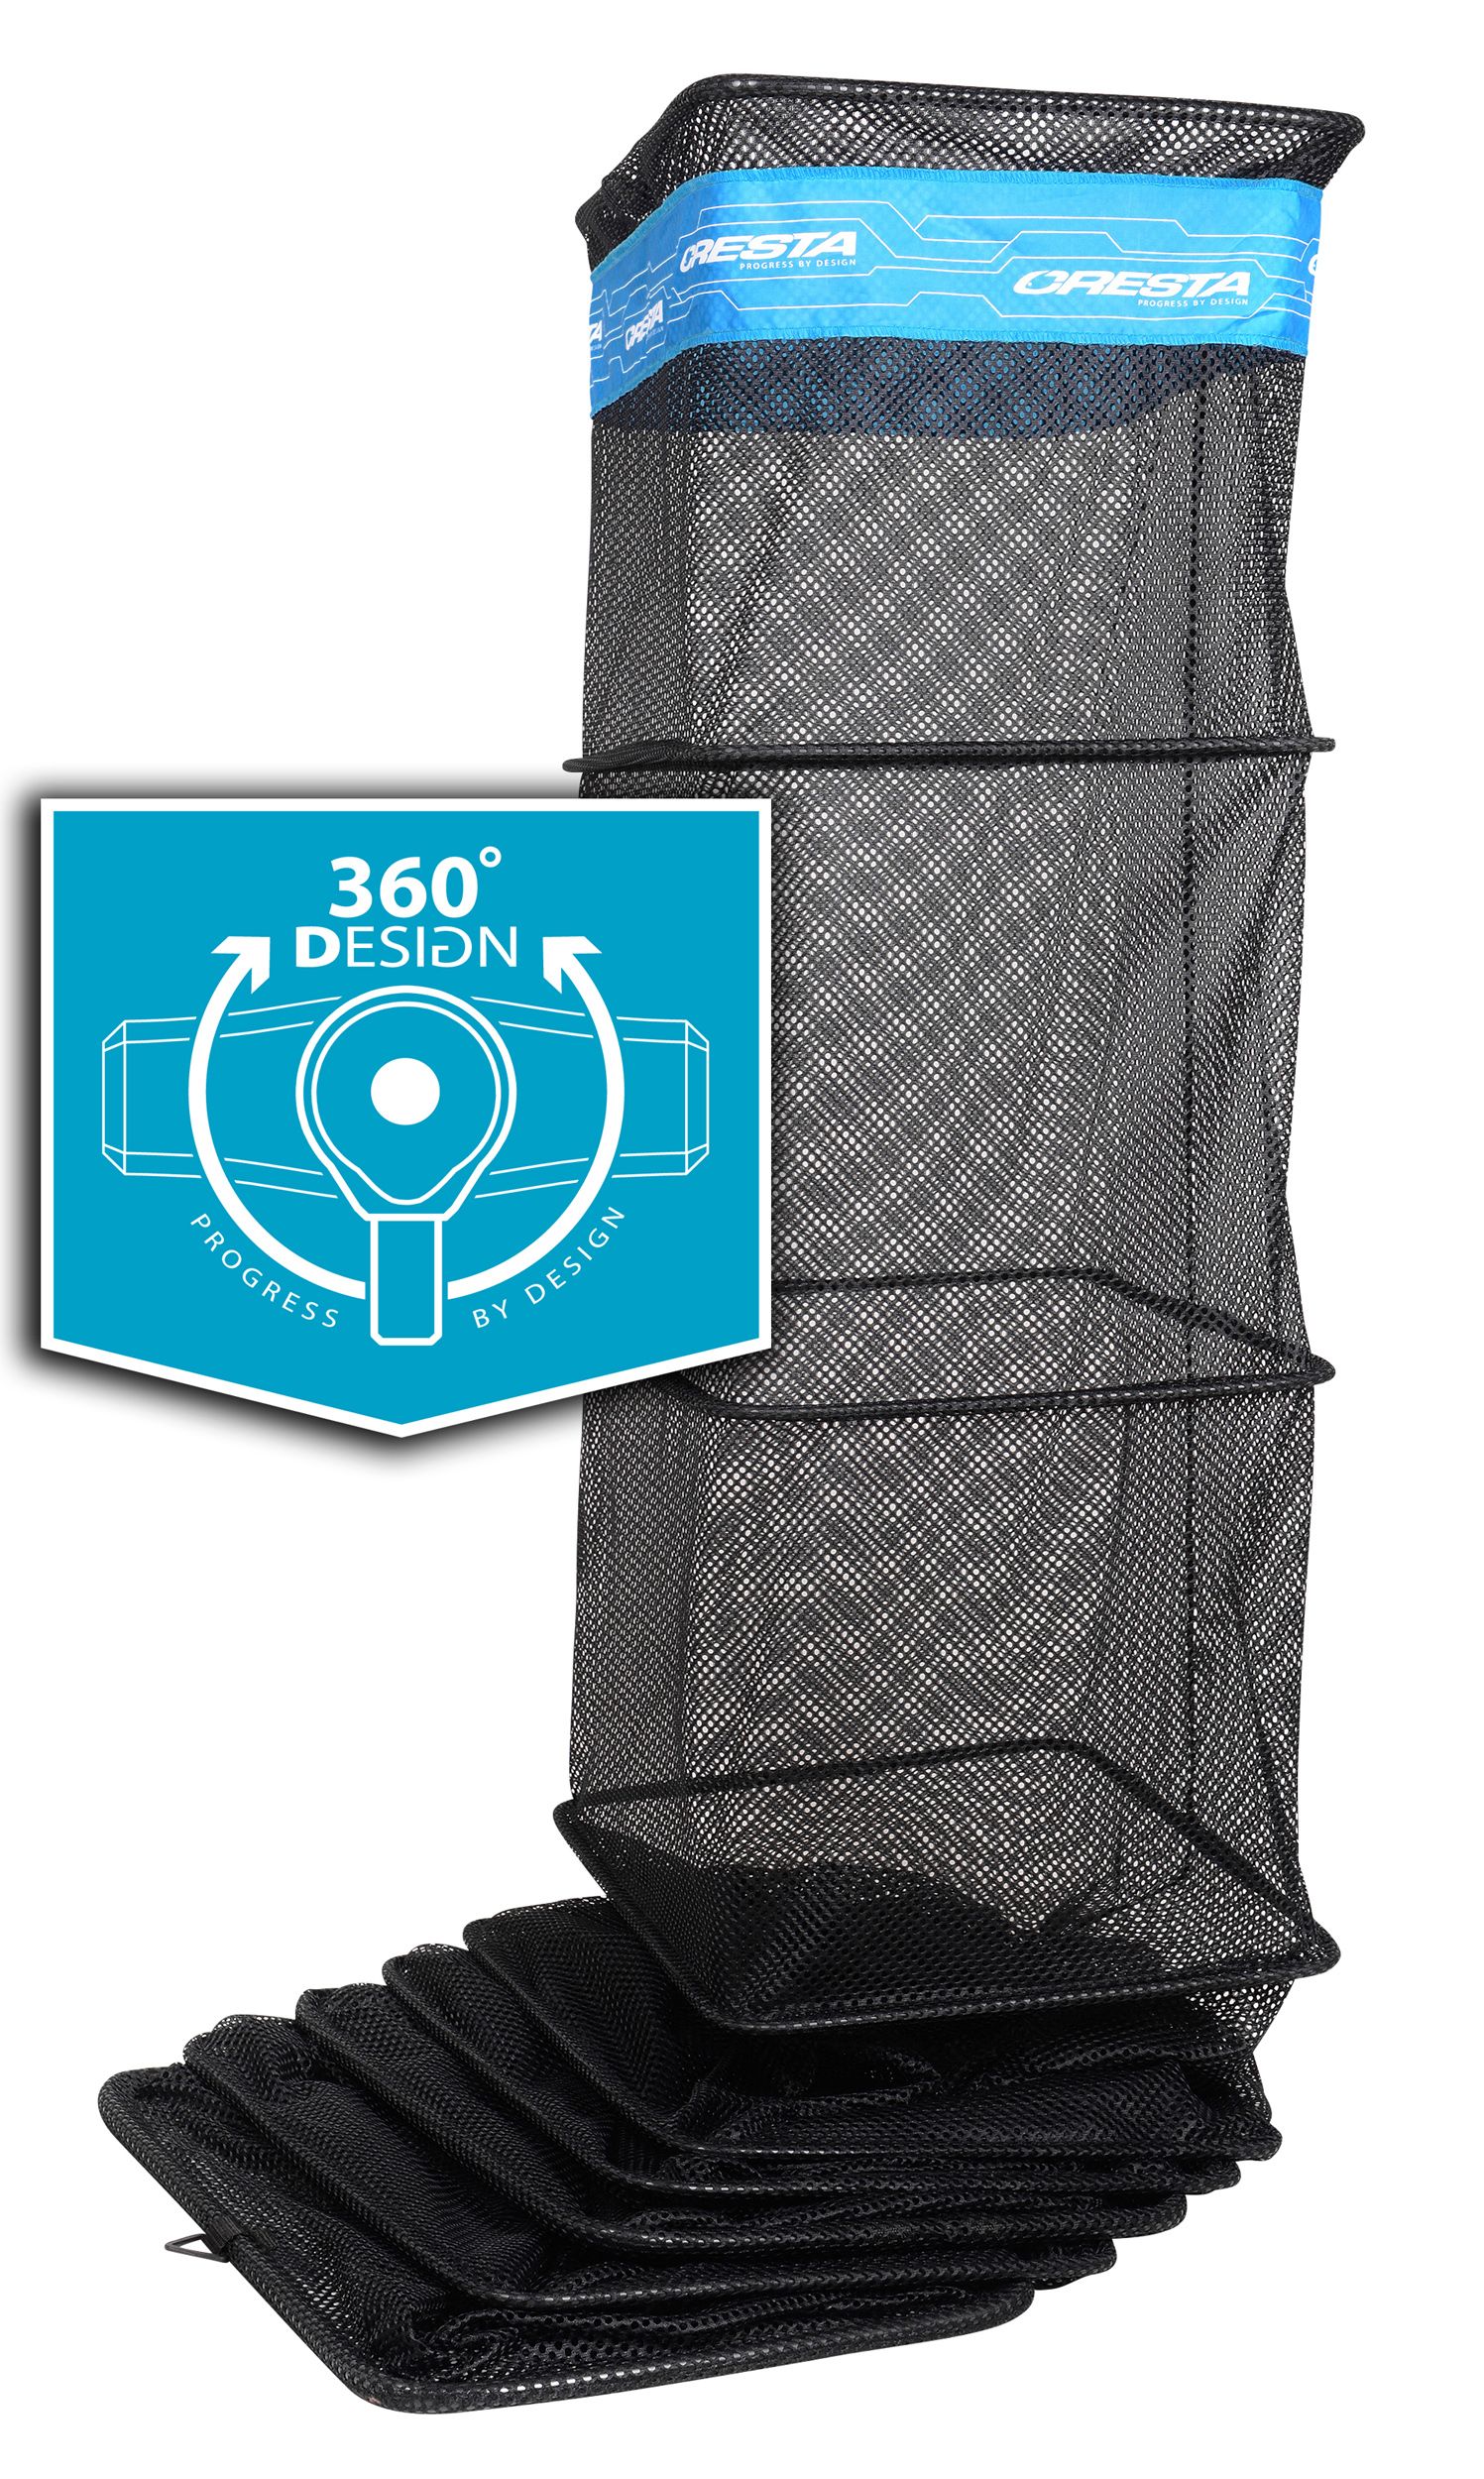 Cresta Easy Dry Setzkescher 360° Block